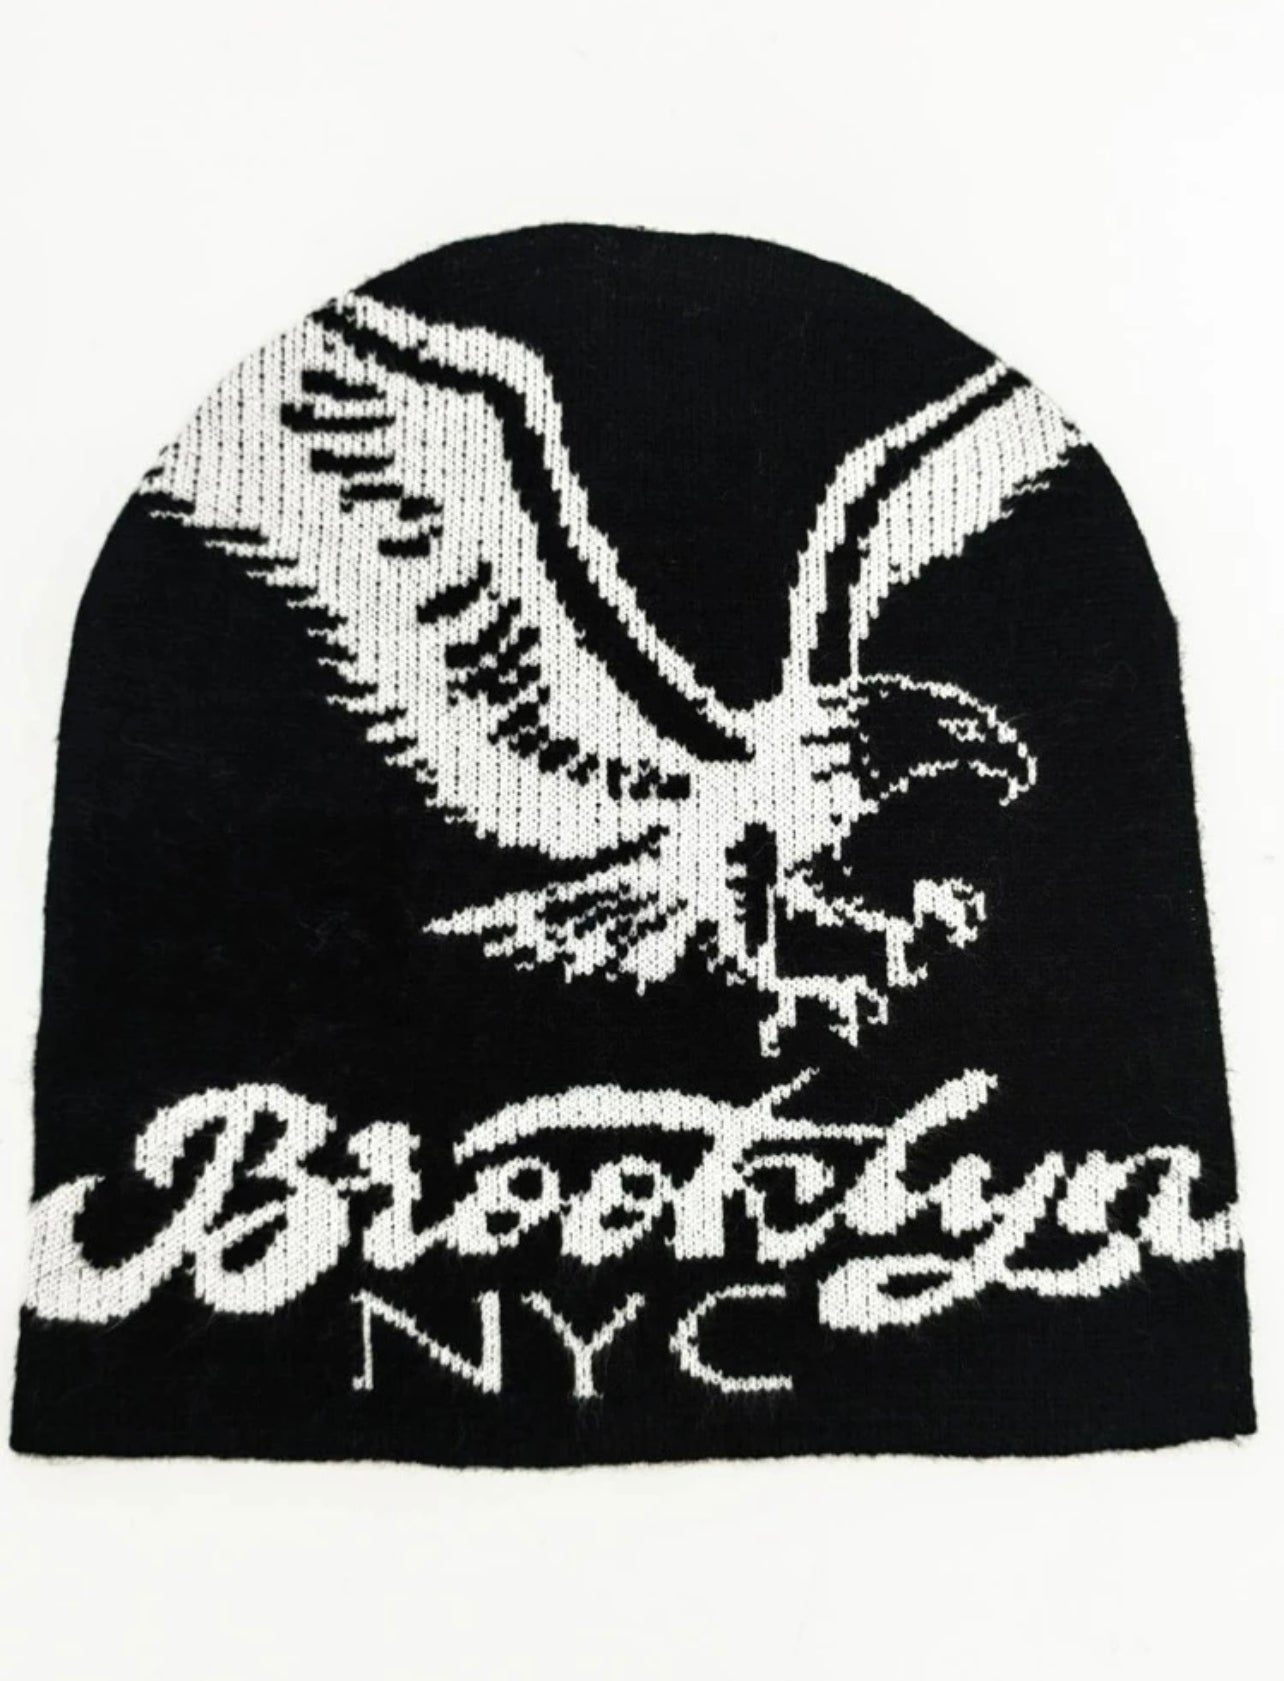 Brooklyn Eagle Graphic print Beanie in black